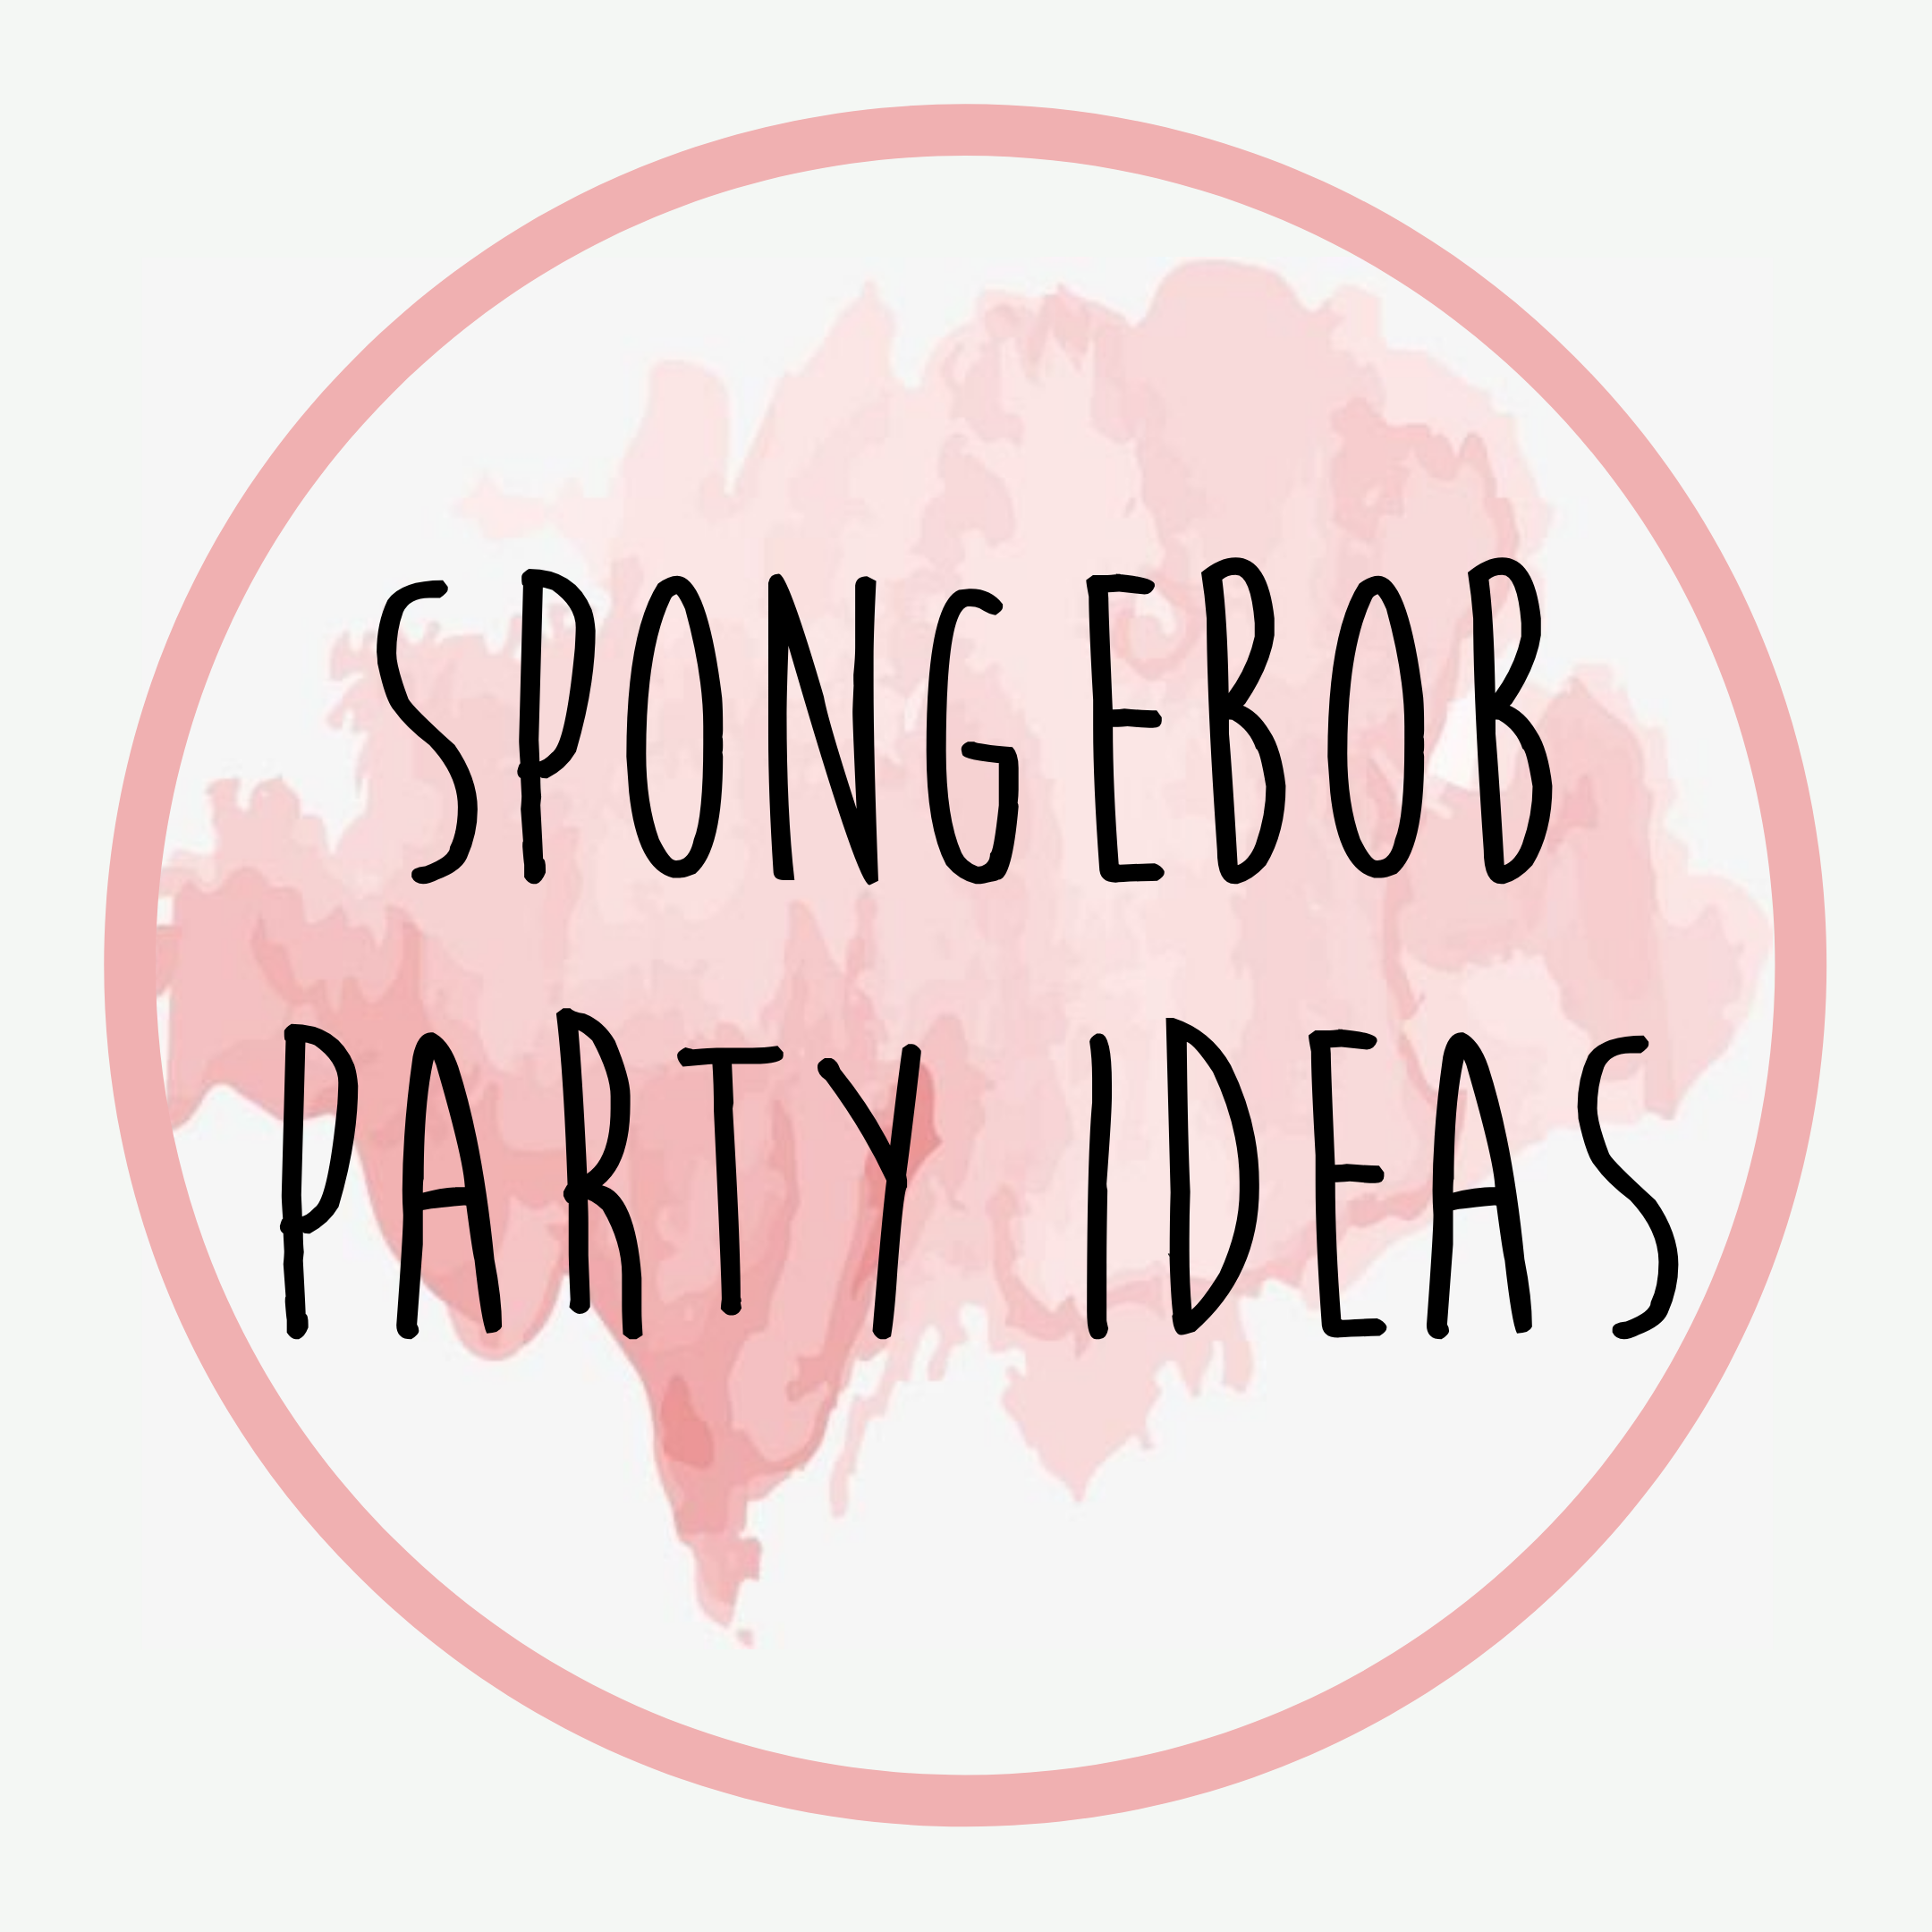 Simple Spongebob birthday party ideas